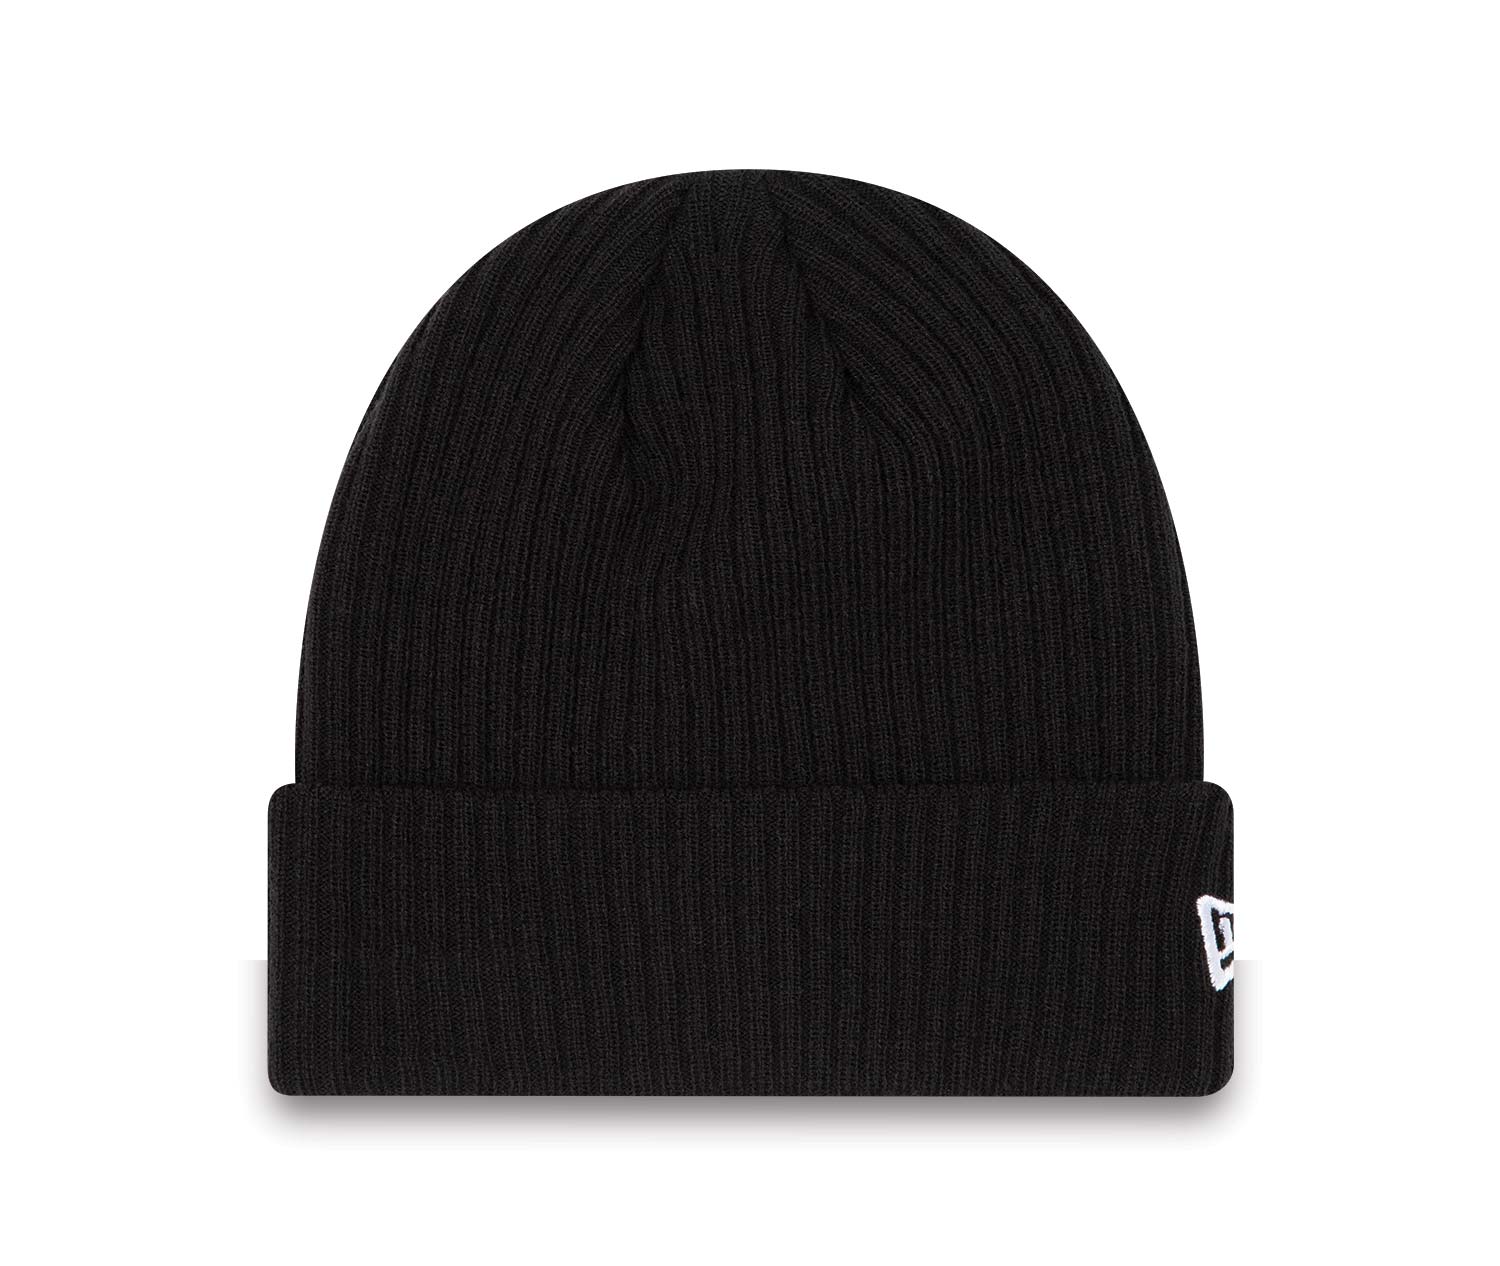 Official New Era Colour Cuff New Era Black Beanie Hat B8753_104 | New ...